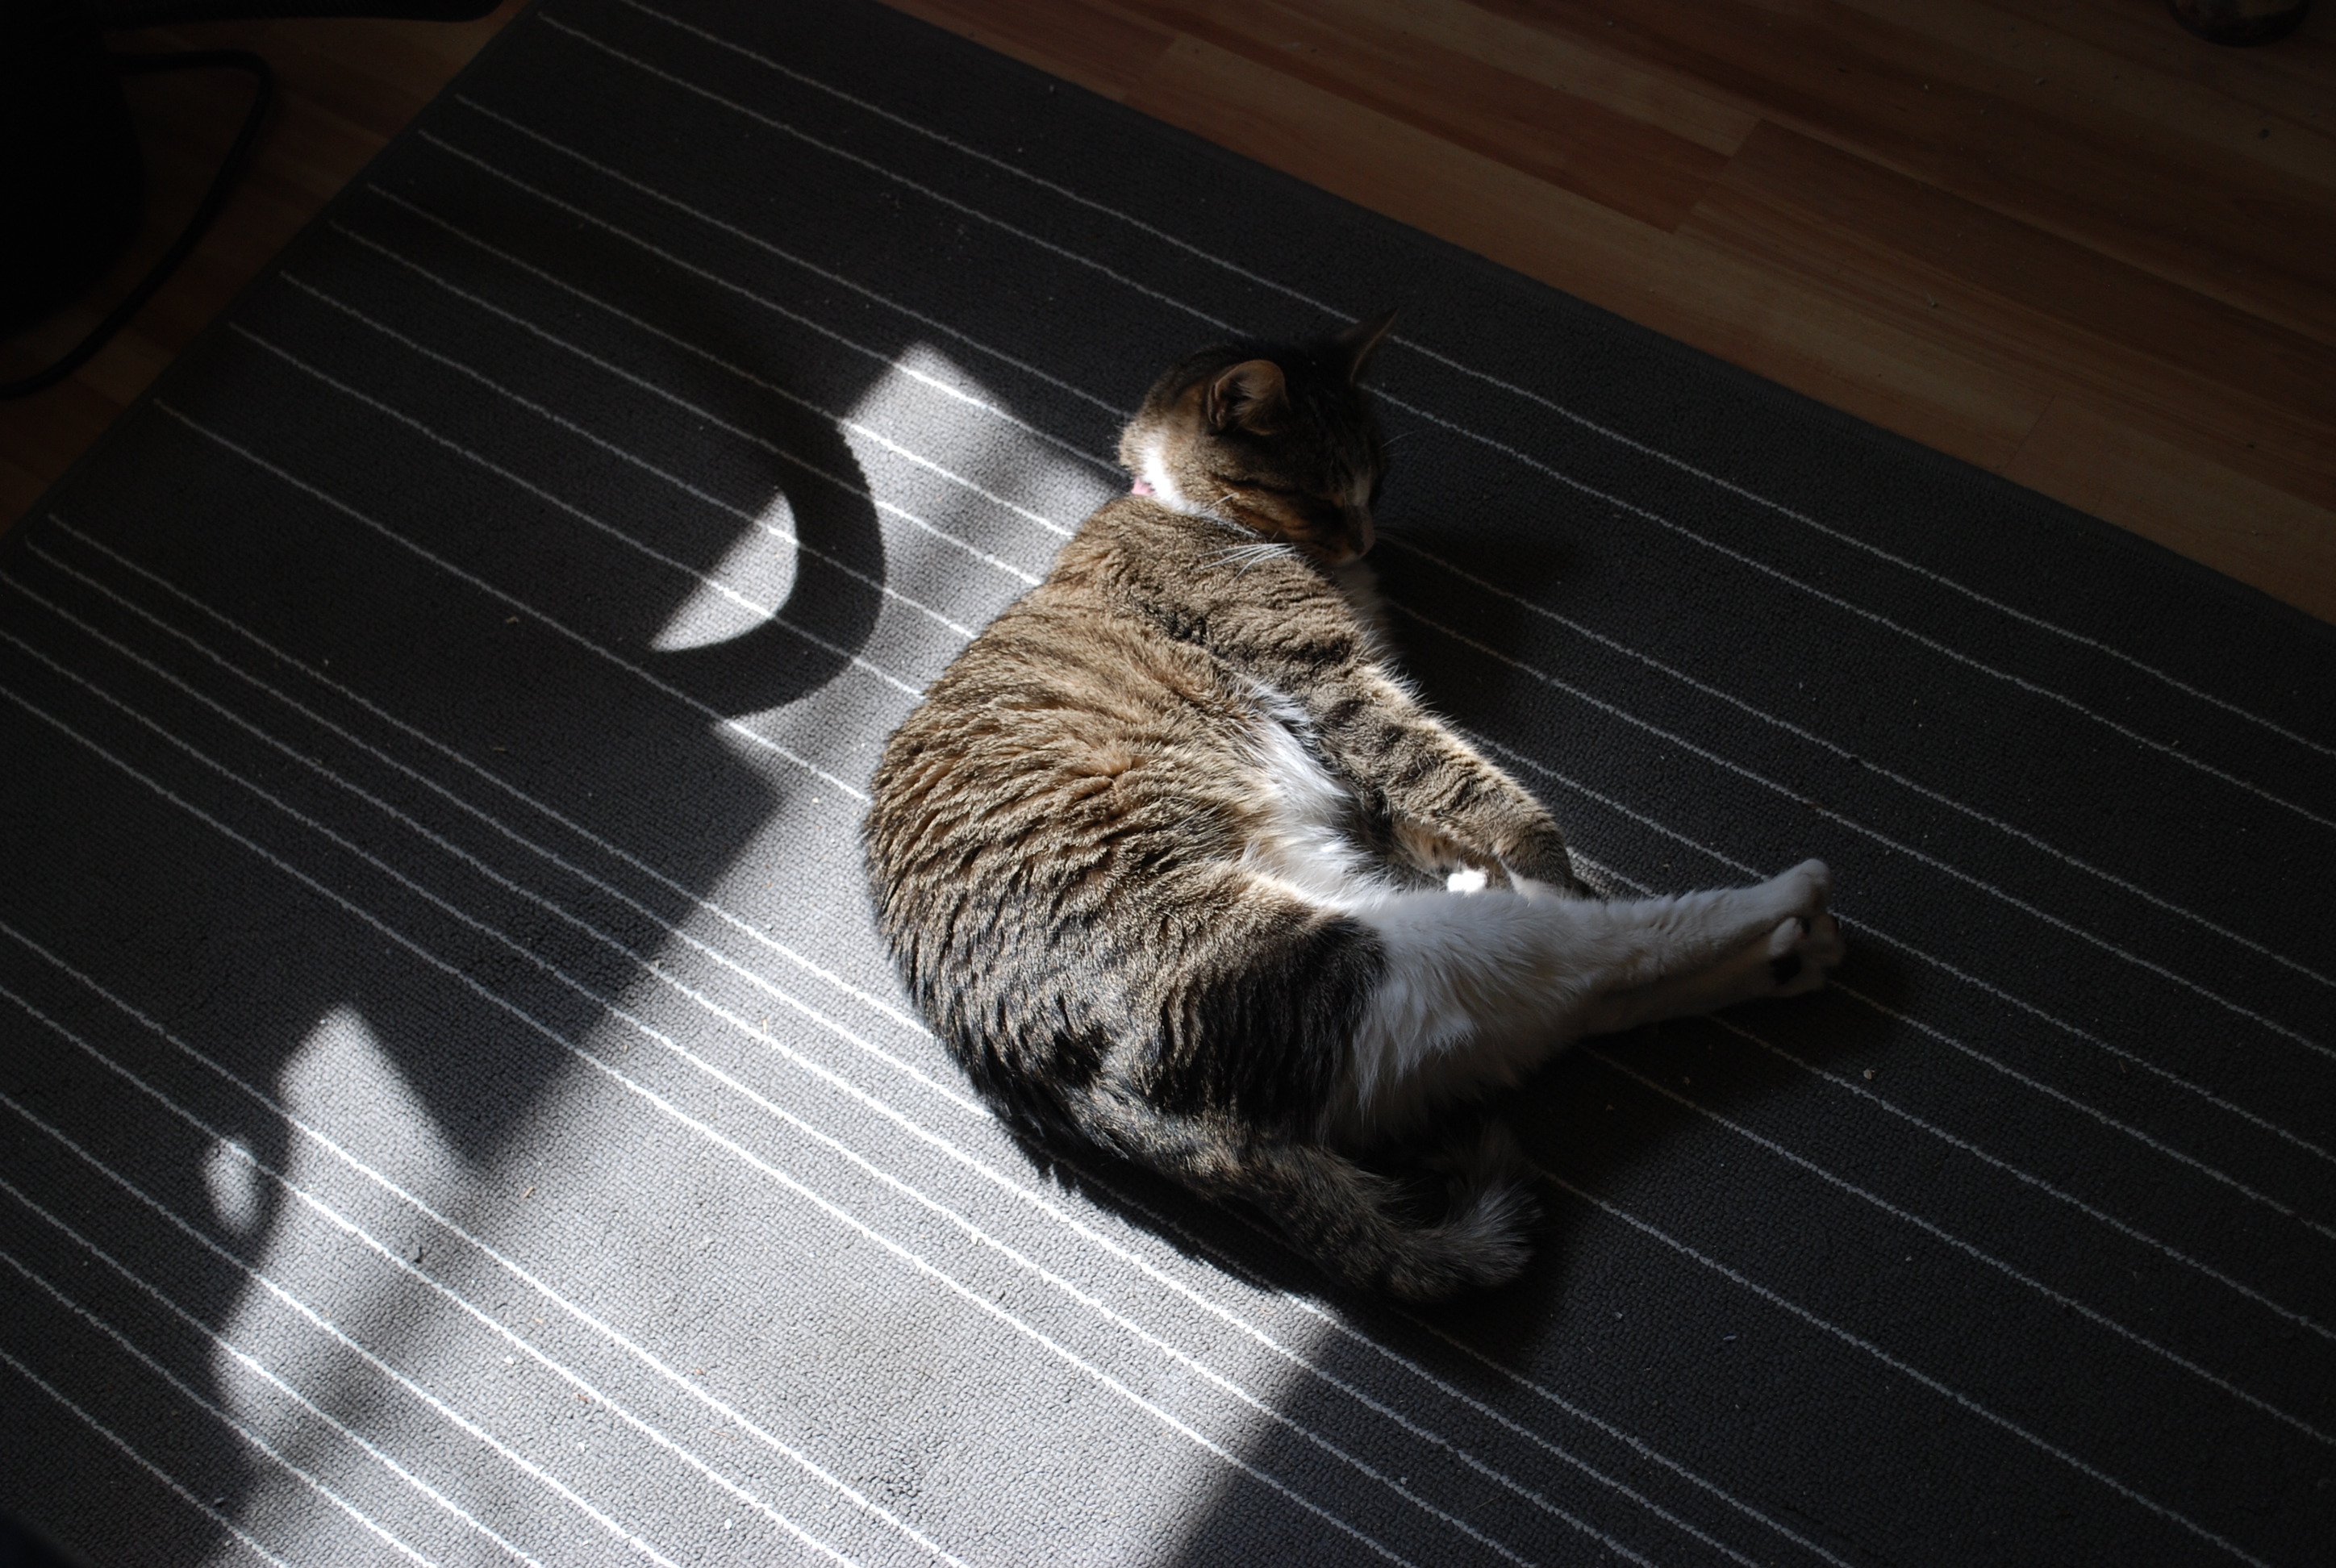 Sally slept in a sunbeam.